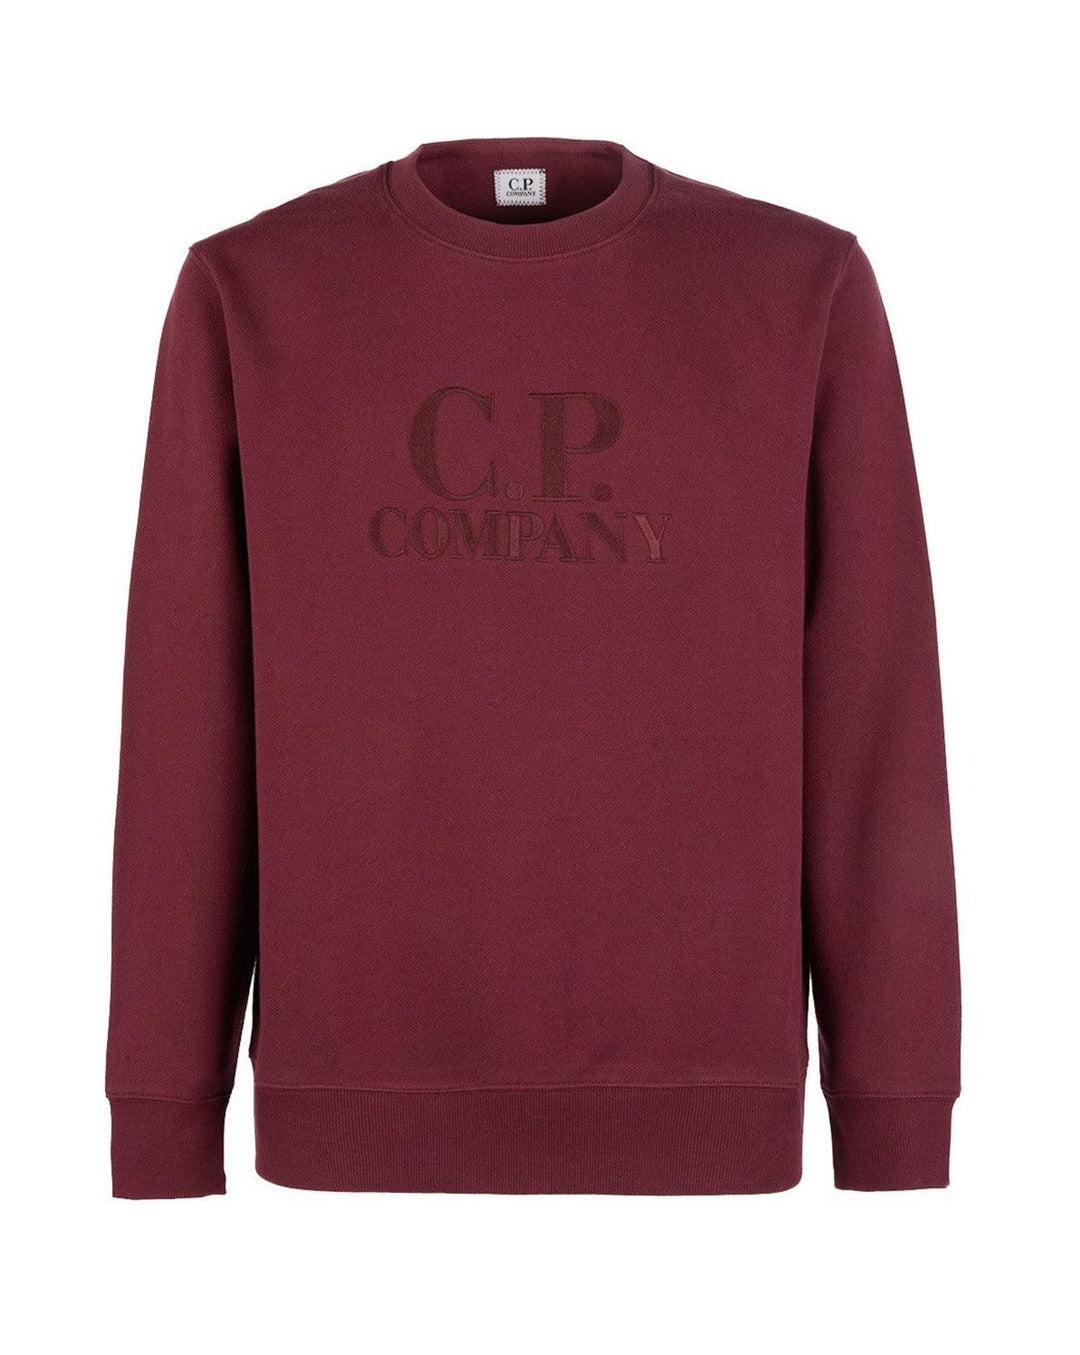 CP Company Embroidered Logo Sweatshirt Port Royal - Urban Menswear